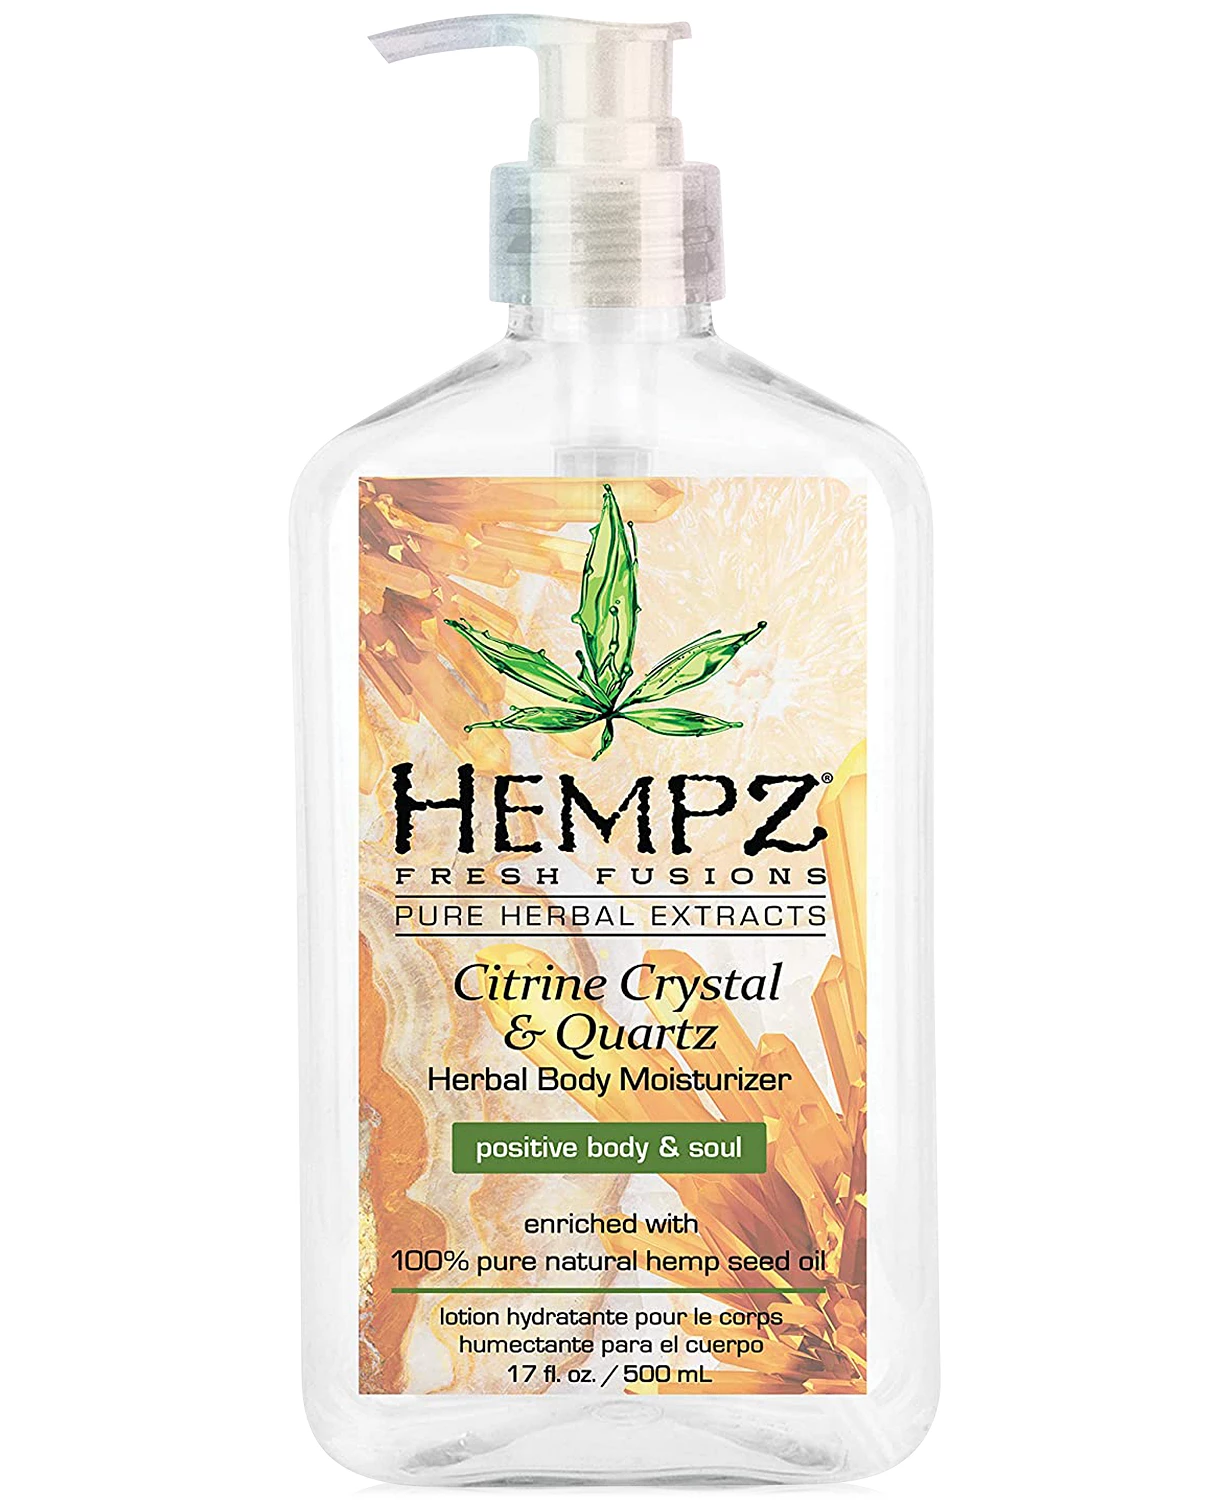 Hempz Fresh Fusions Citrine Crystal & Quartz Herbal Body Moisturizer, 17-oz., from PUREBEAUTY Salon & Spa & Reviews - Macy's